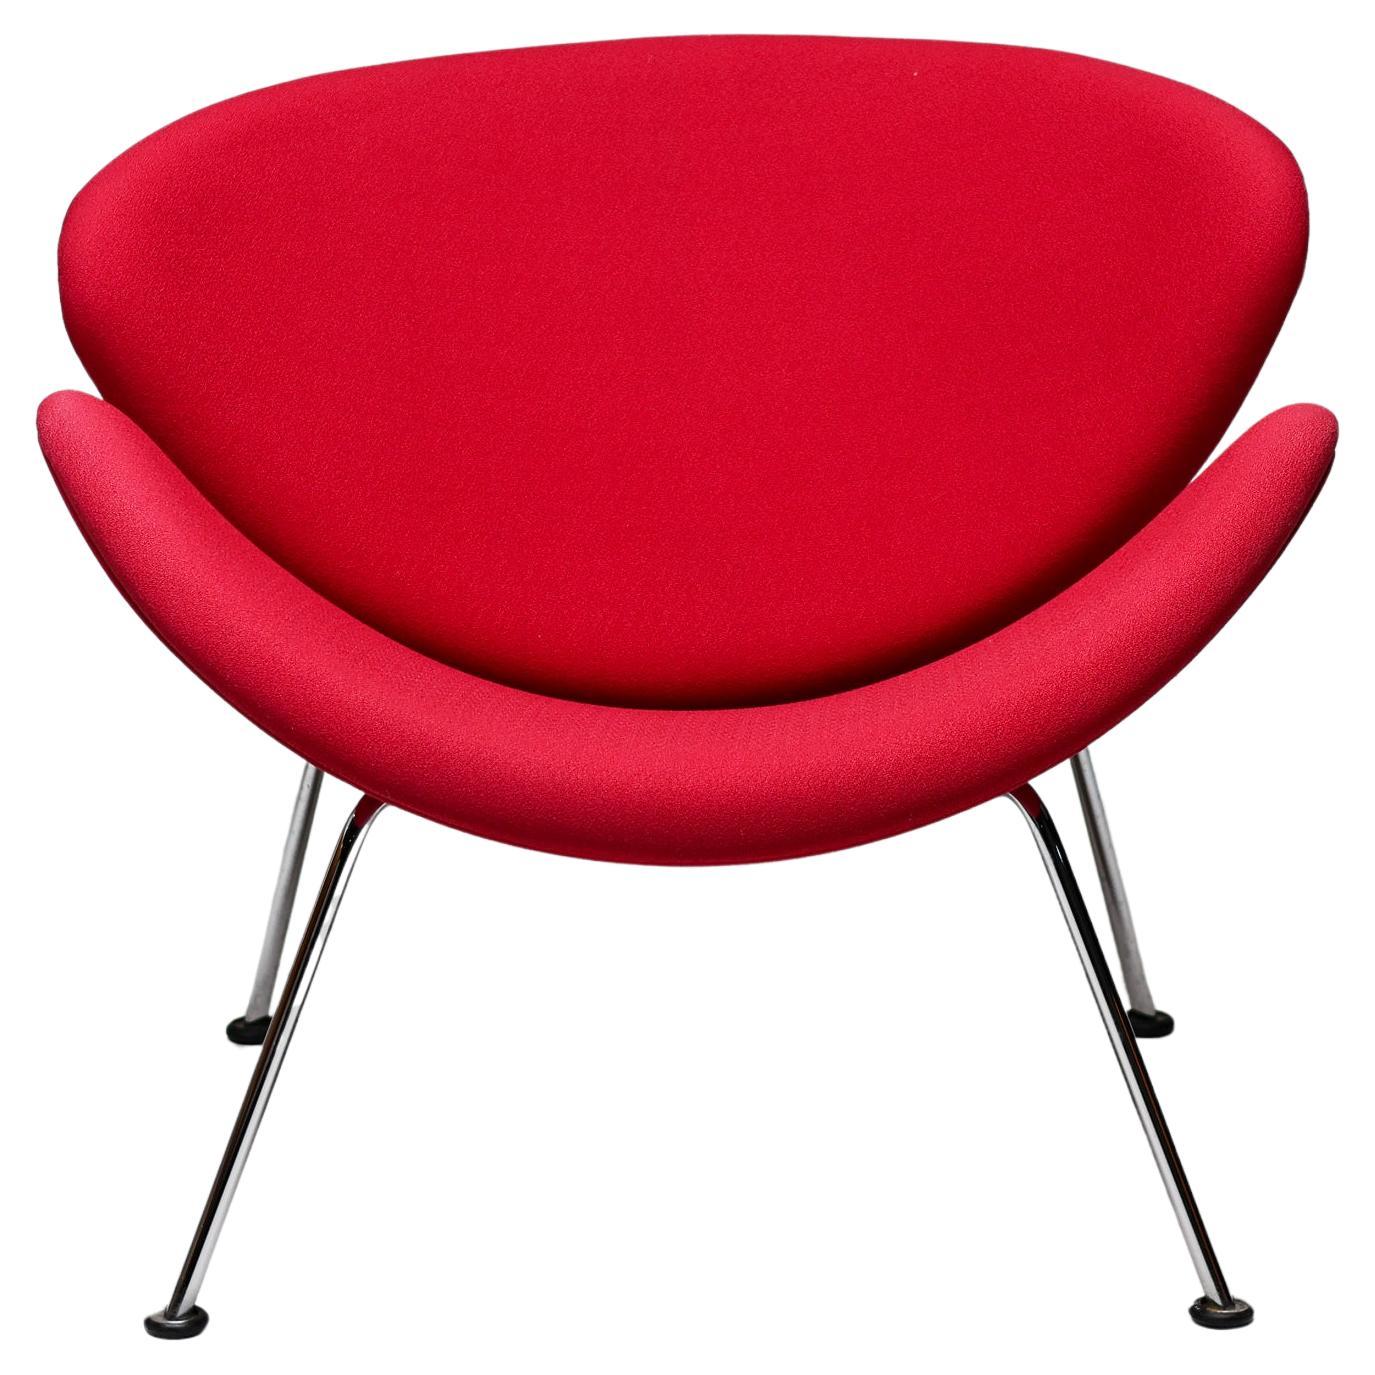 Stuhl mit schalenförmigem Design